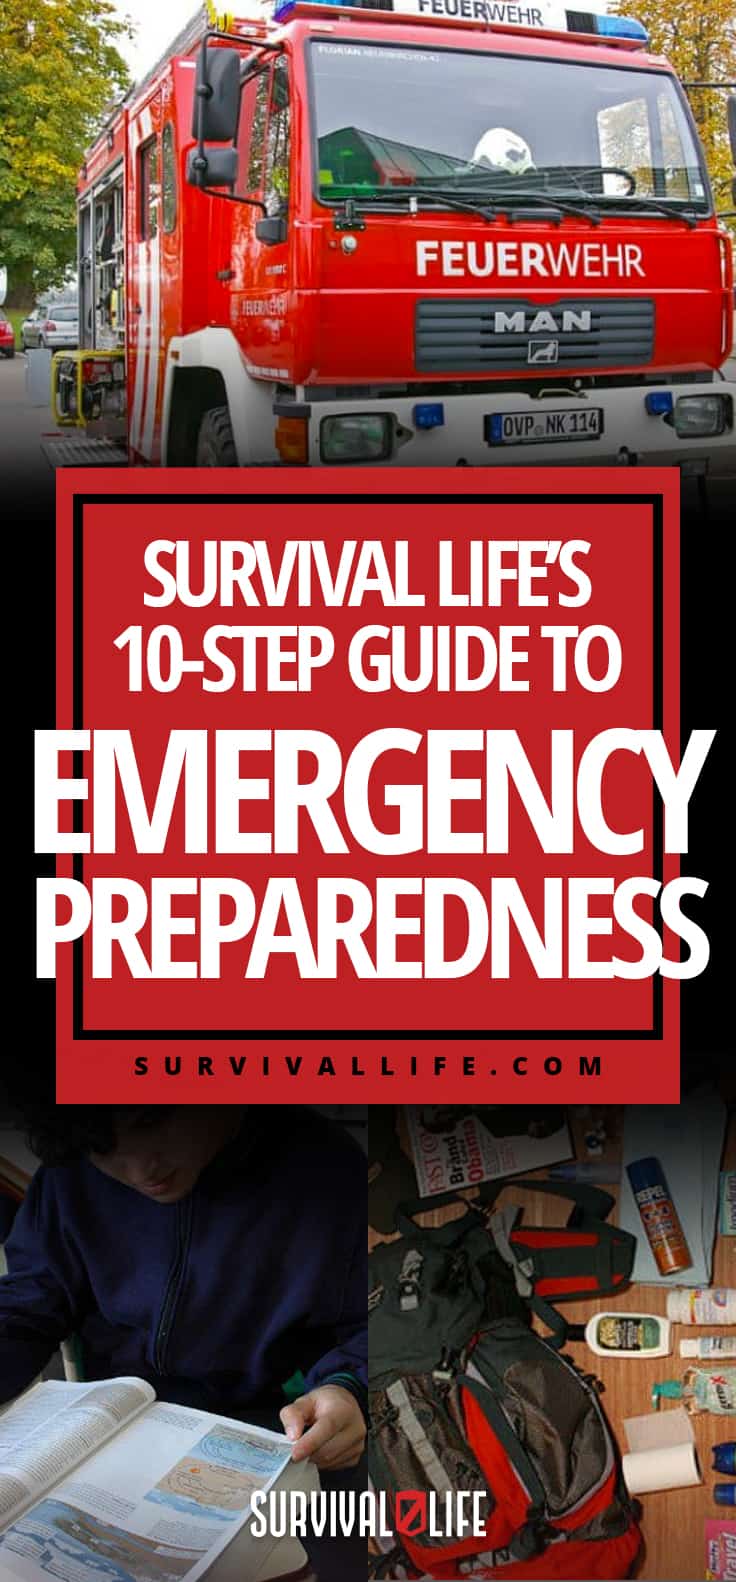 Survival Life’s 10-Step Guide To Emergency Preparedness